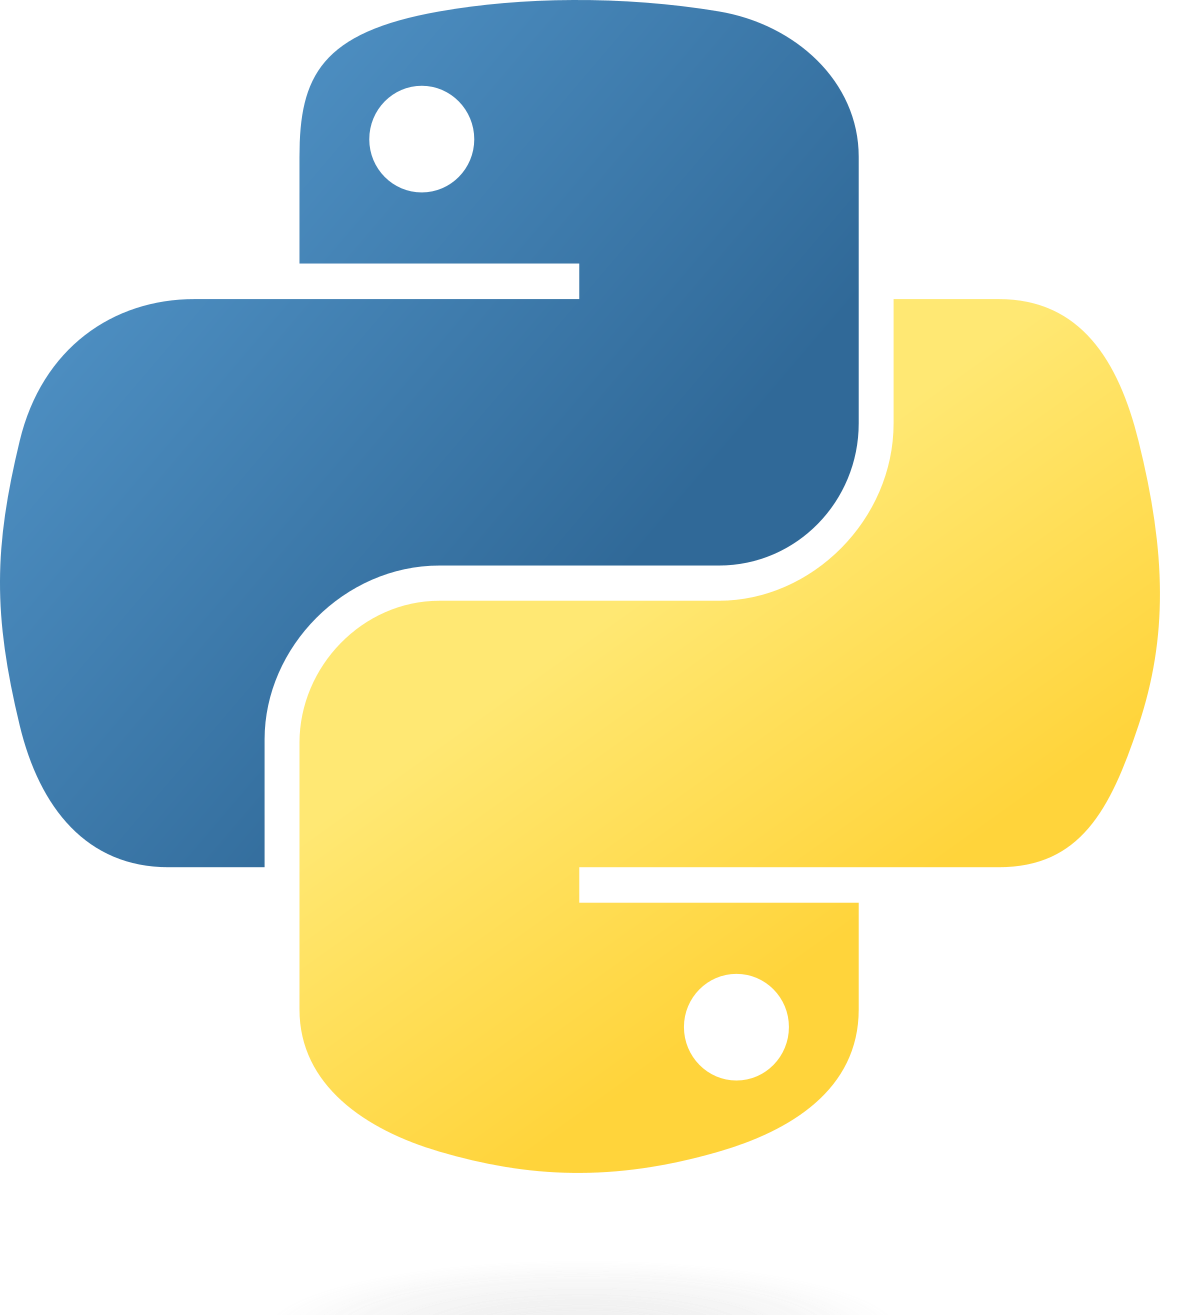 Python (programming language) - UmGeeks 